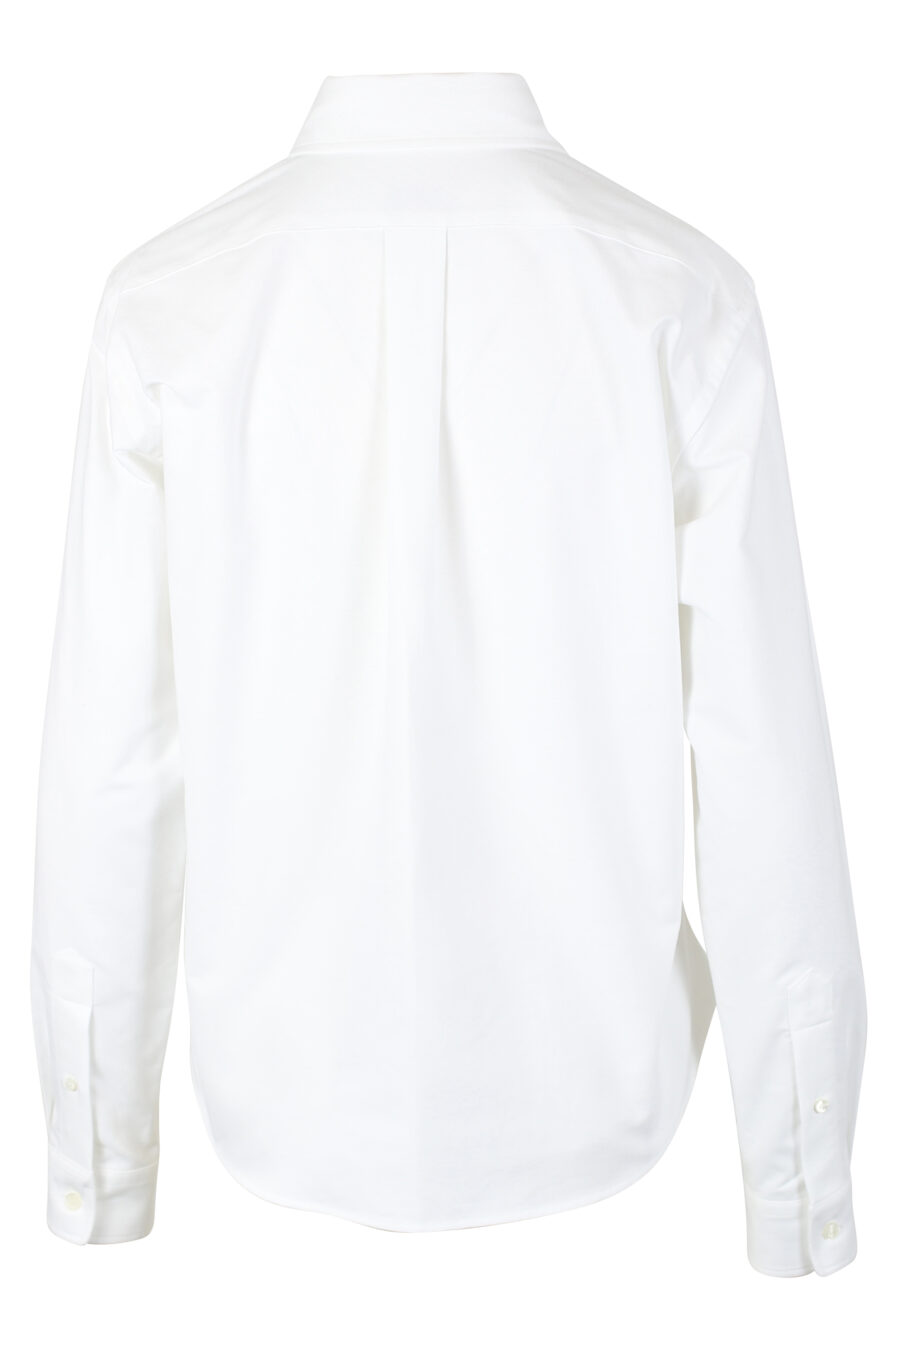 White shirt with orange mini-logo - IMG 9789